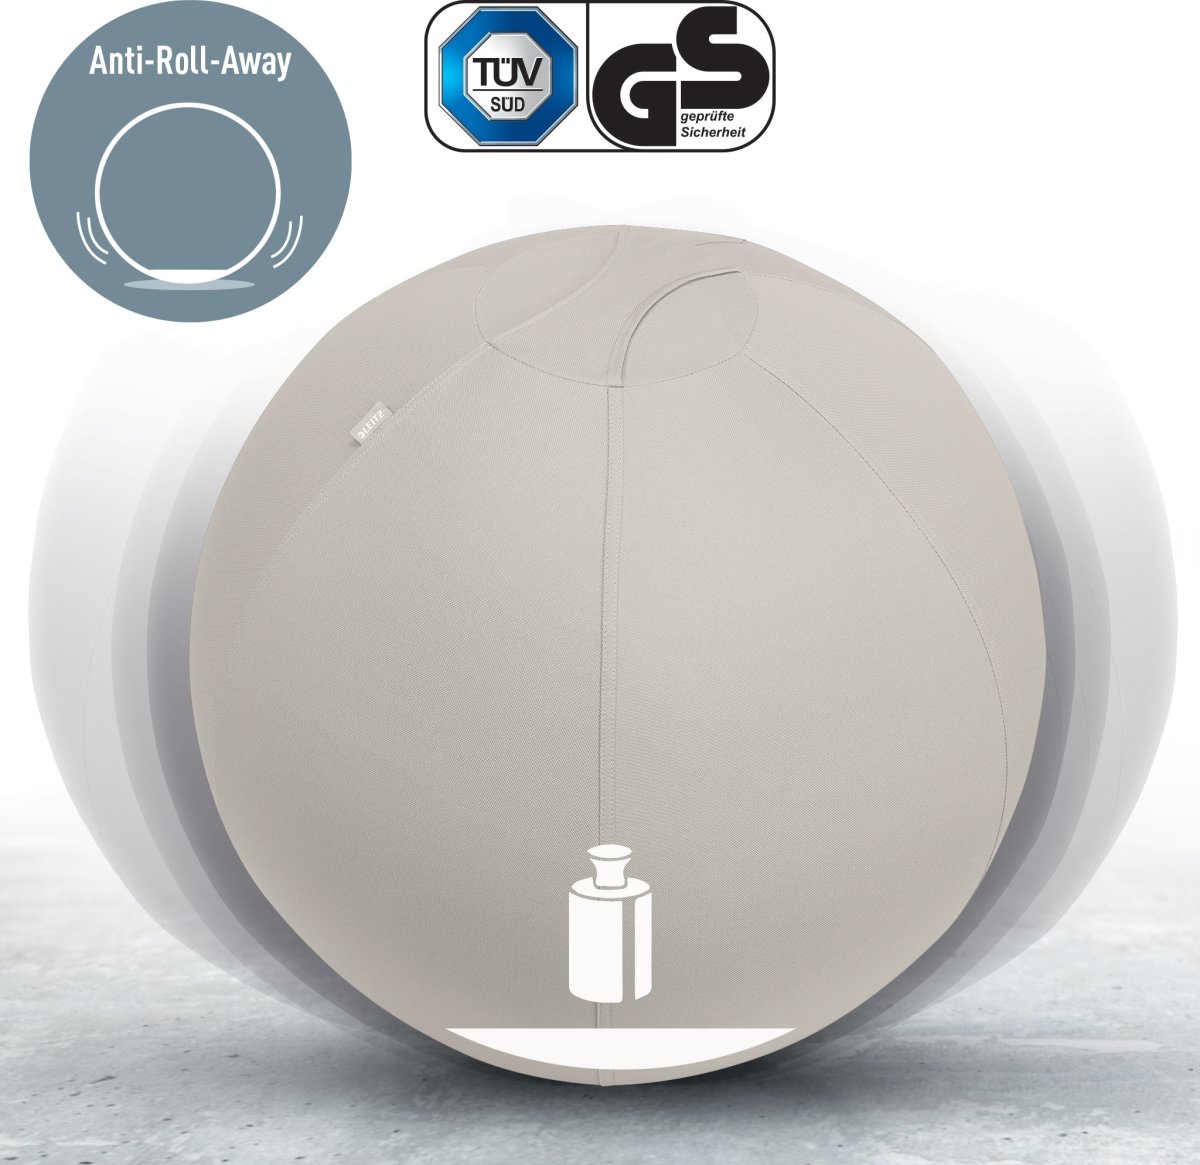 Leitz Ergo Active balancebold, grå, 75 cm